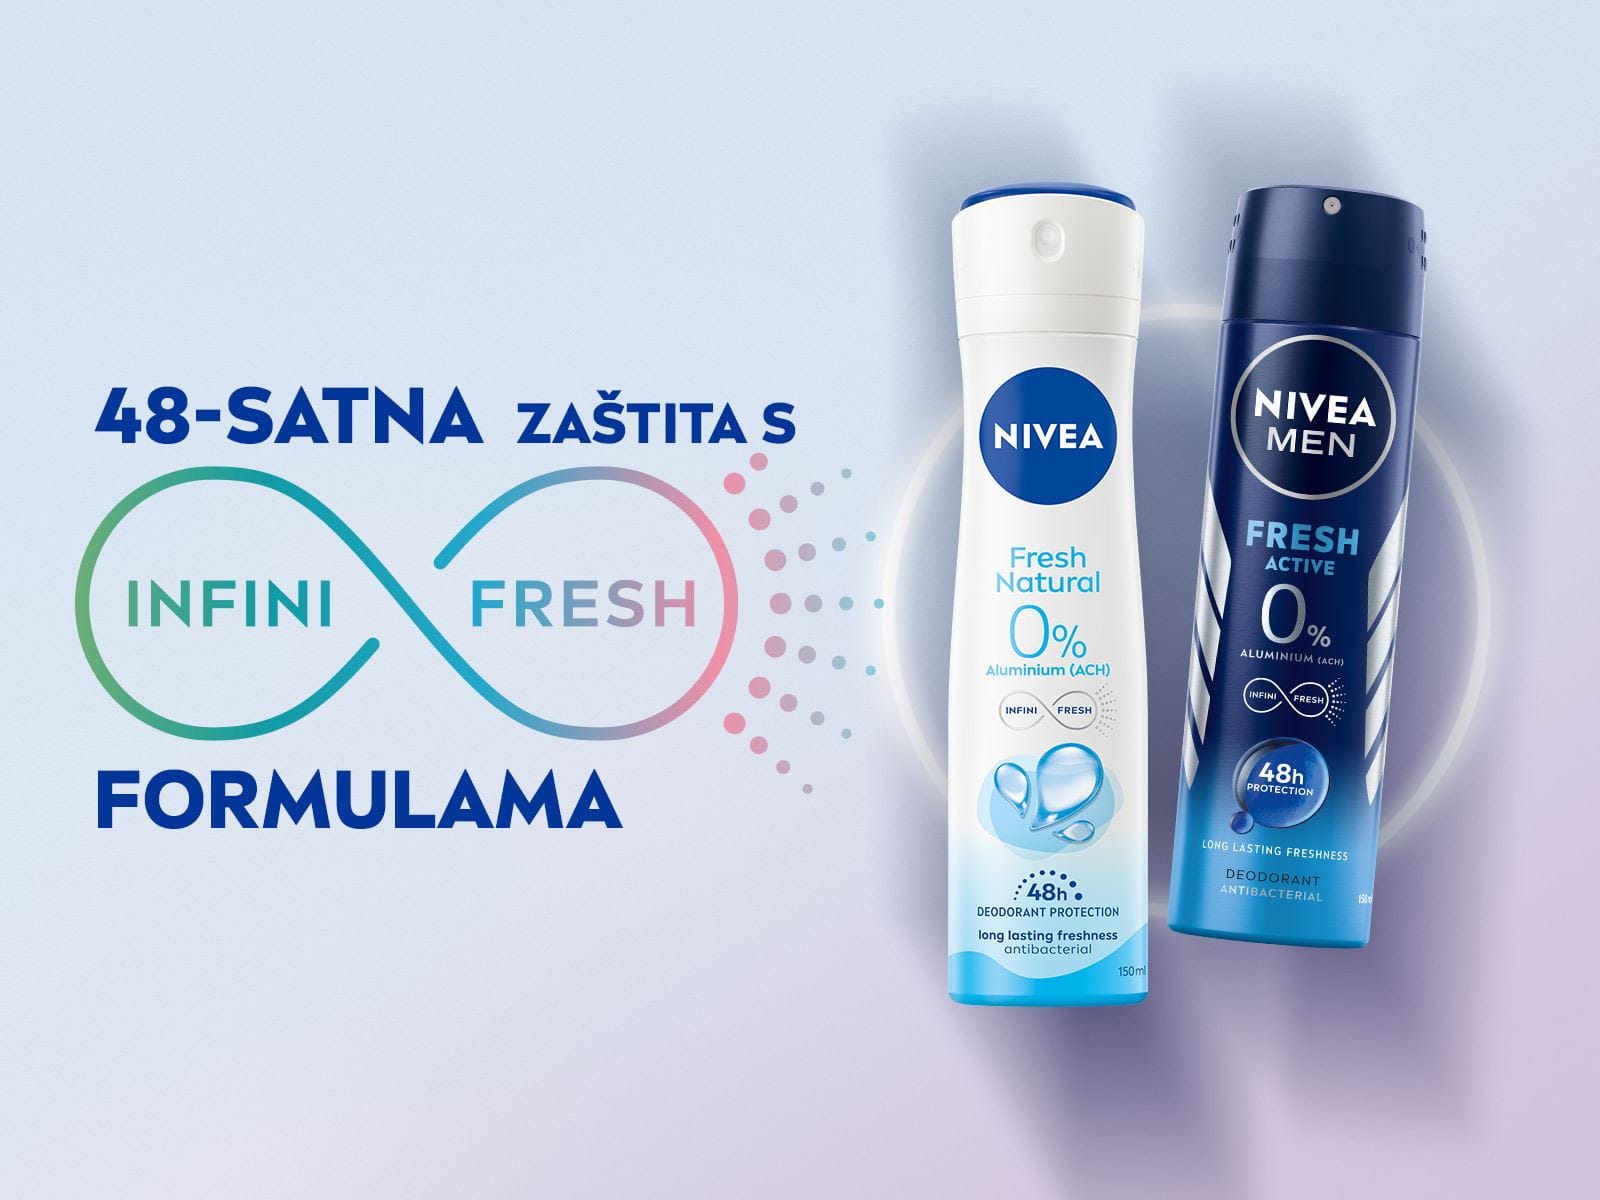 NIVEA Fresh Sensation antiperspirant